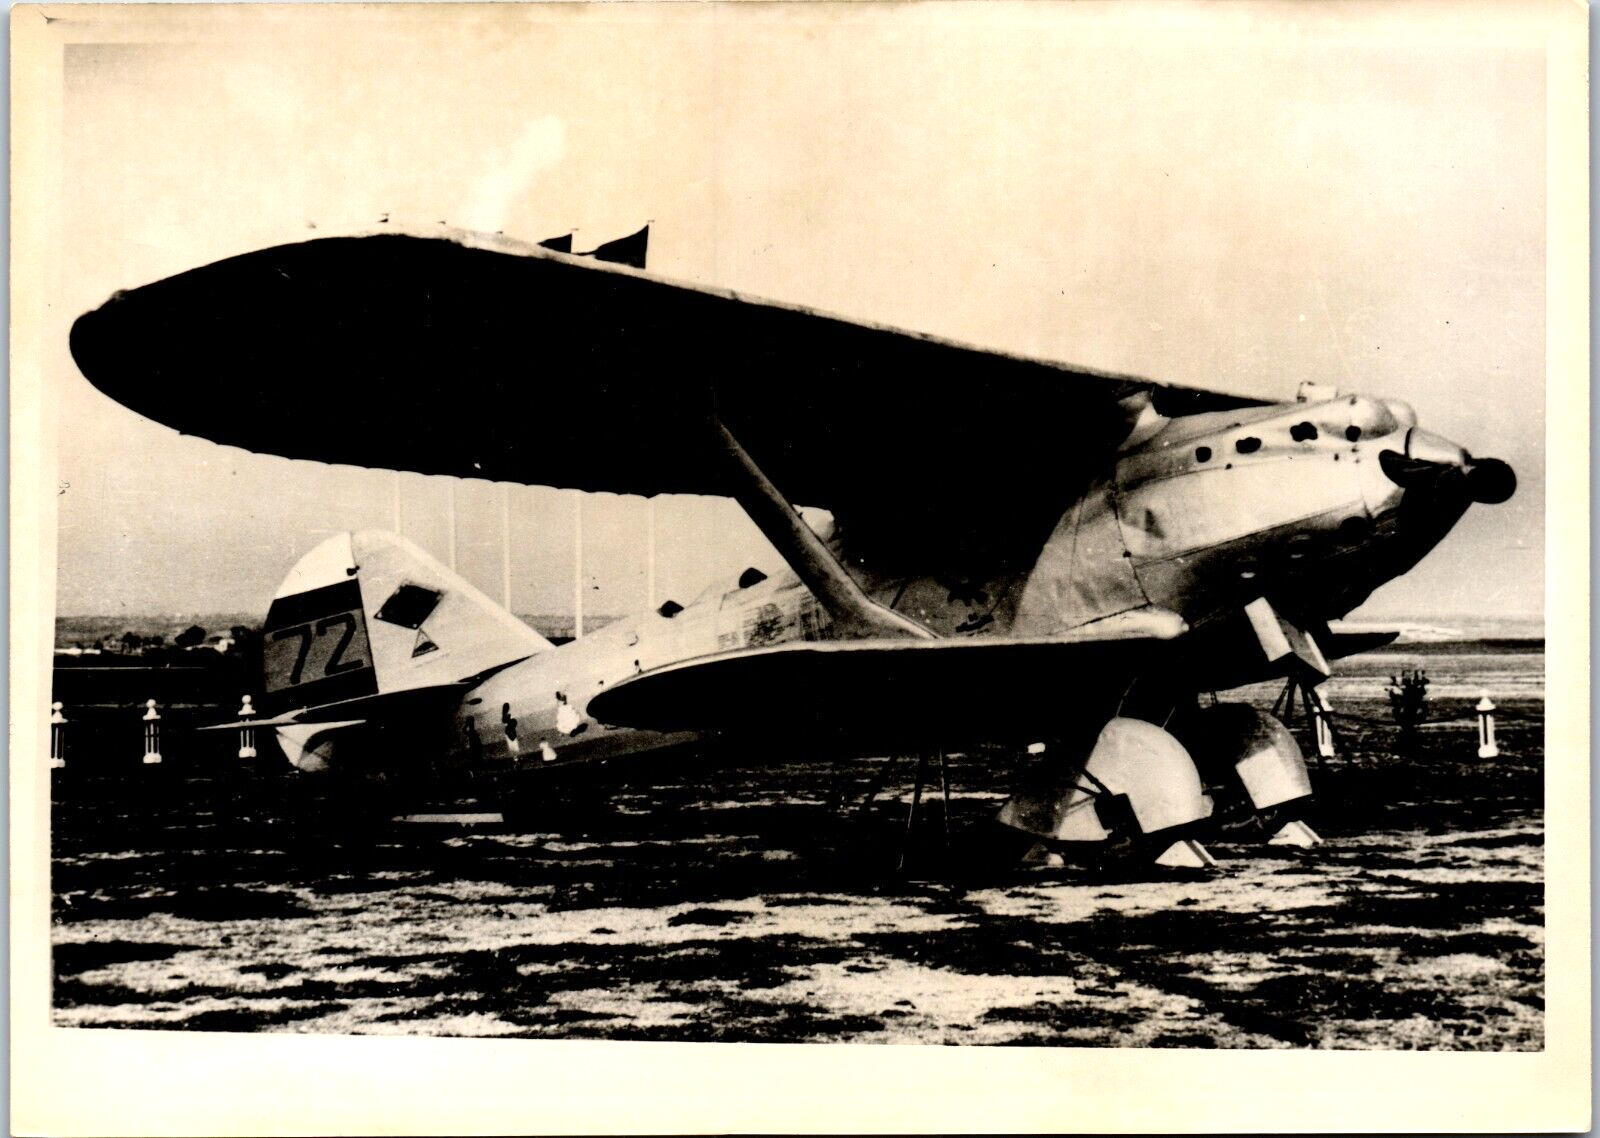 Breguet BRE-XIX Military Plane Reprint Photograph (5 x 7 Inches) France, Bomber